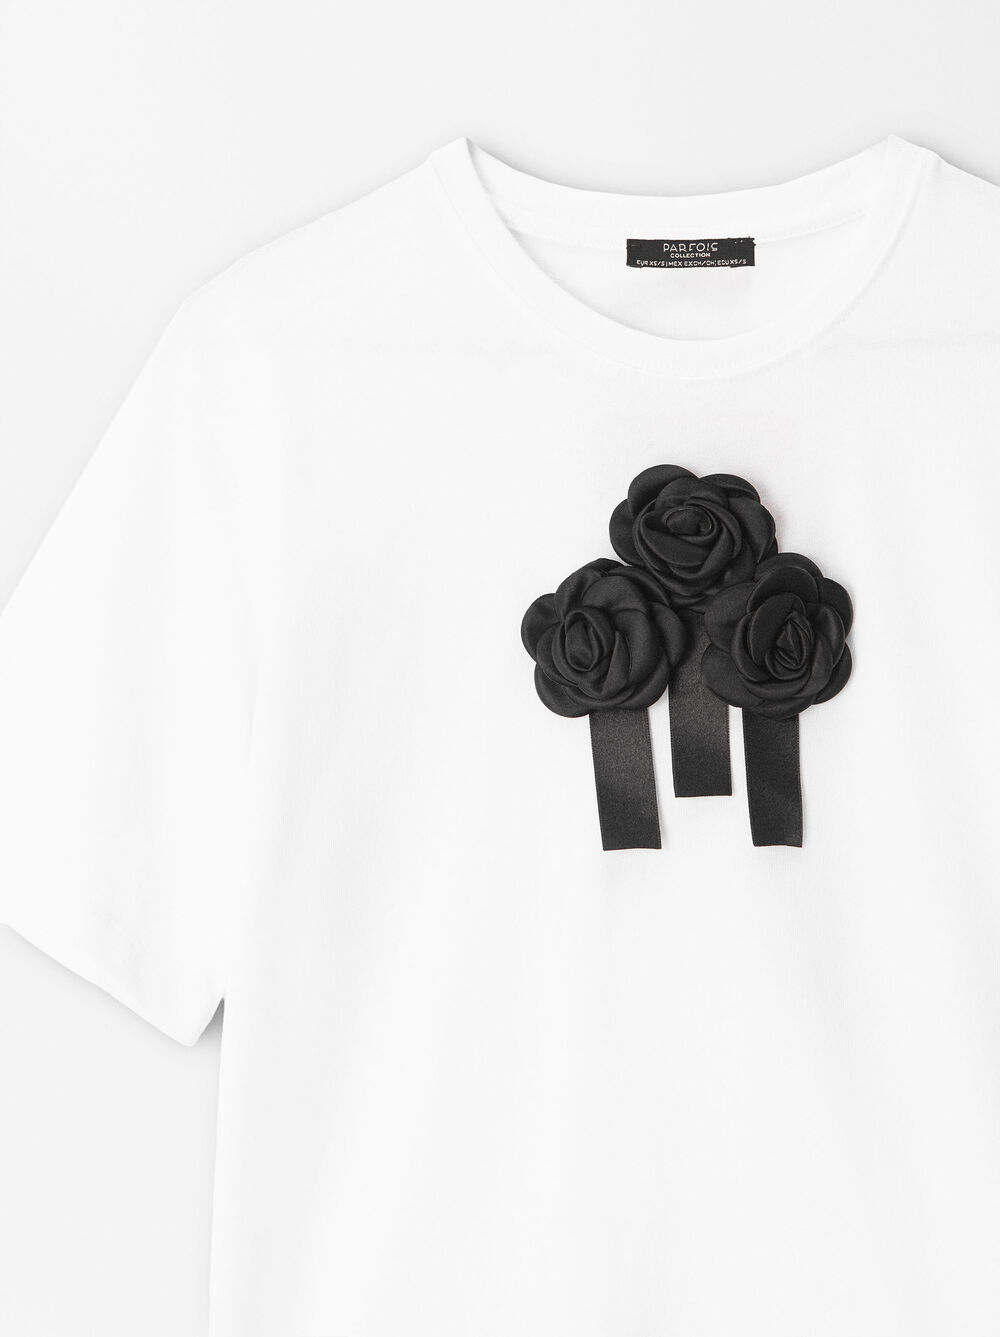 Exclusivo Online - Camiseta 100% Algodón Flores